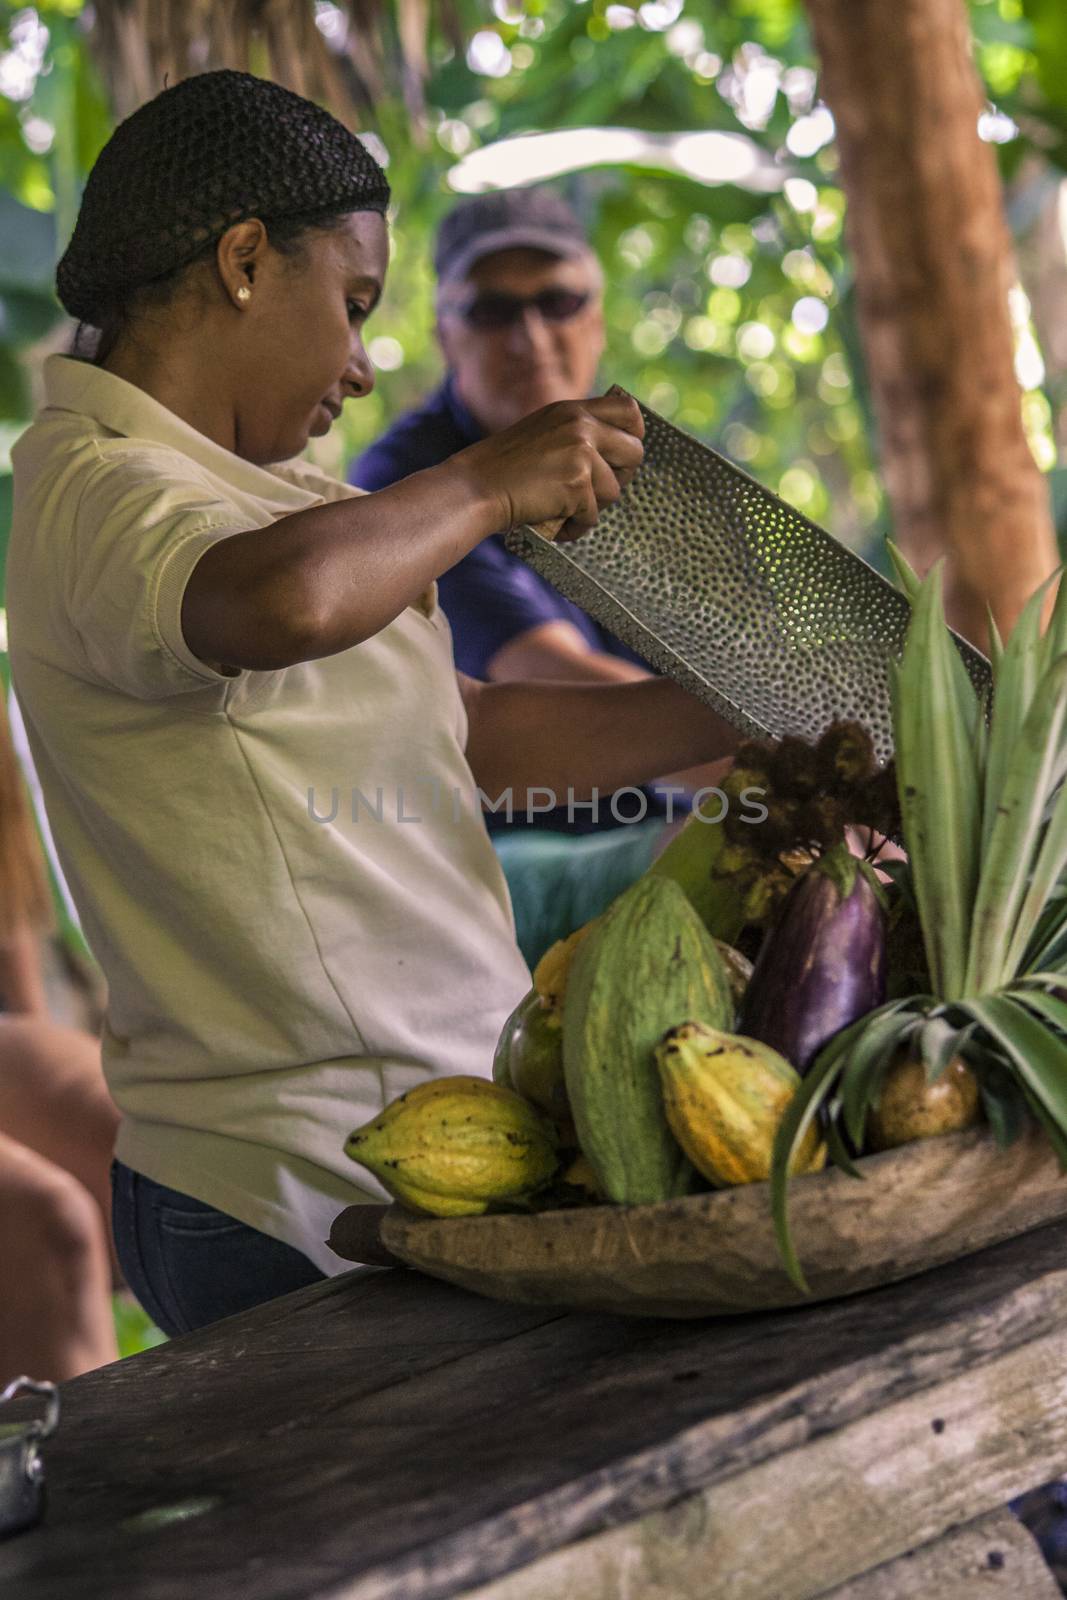 MONTANA REDONDA, DOMINICAN REPUBLIC 27 DECEMBER 2019: Woman works in a cocoa cultivation in the Dominican Republic